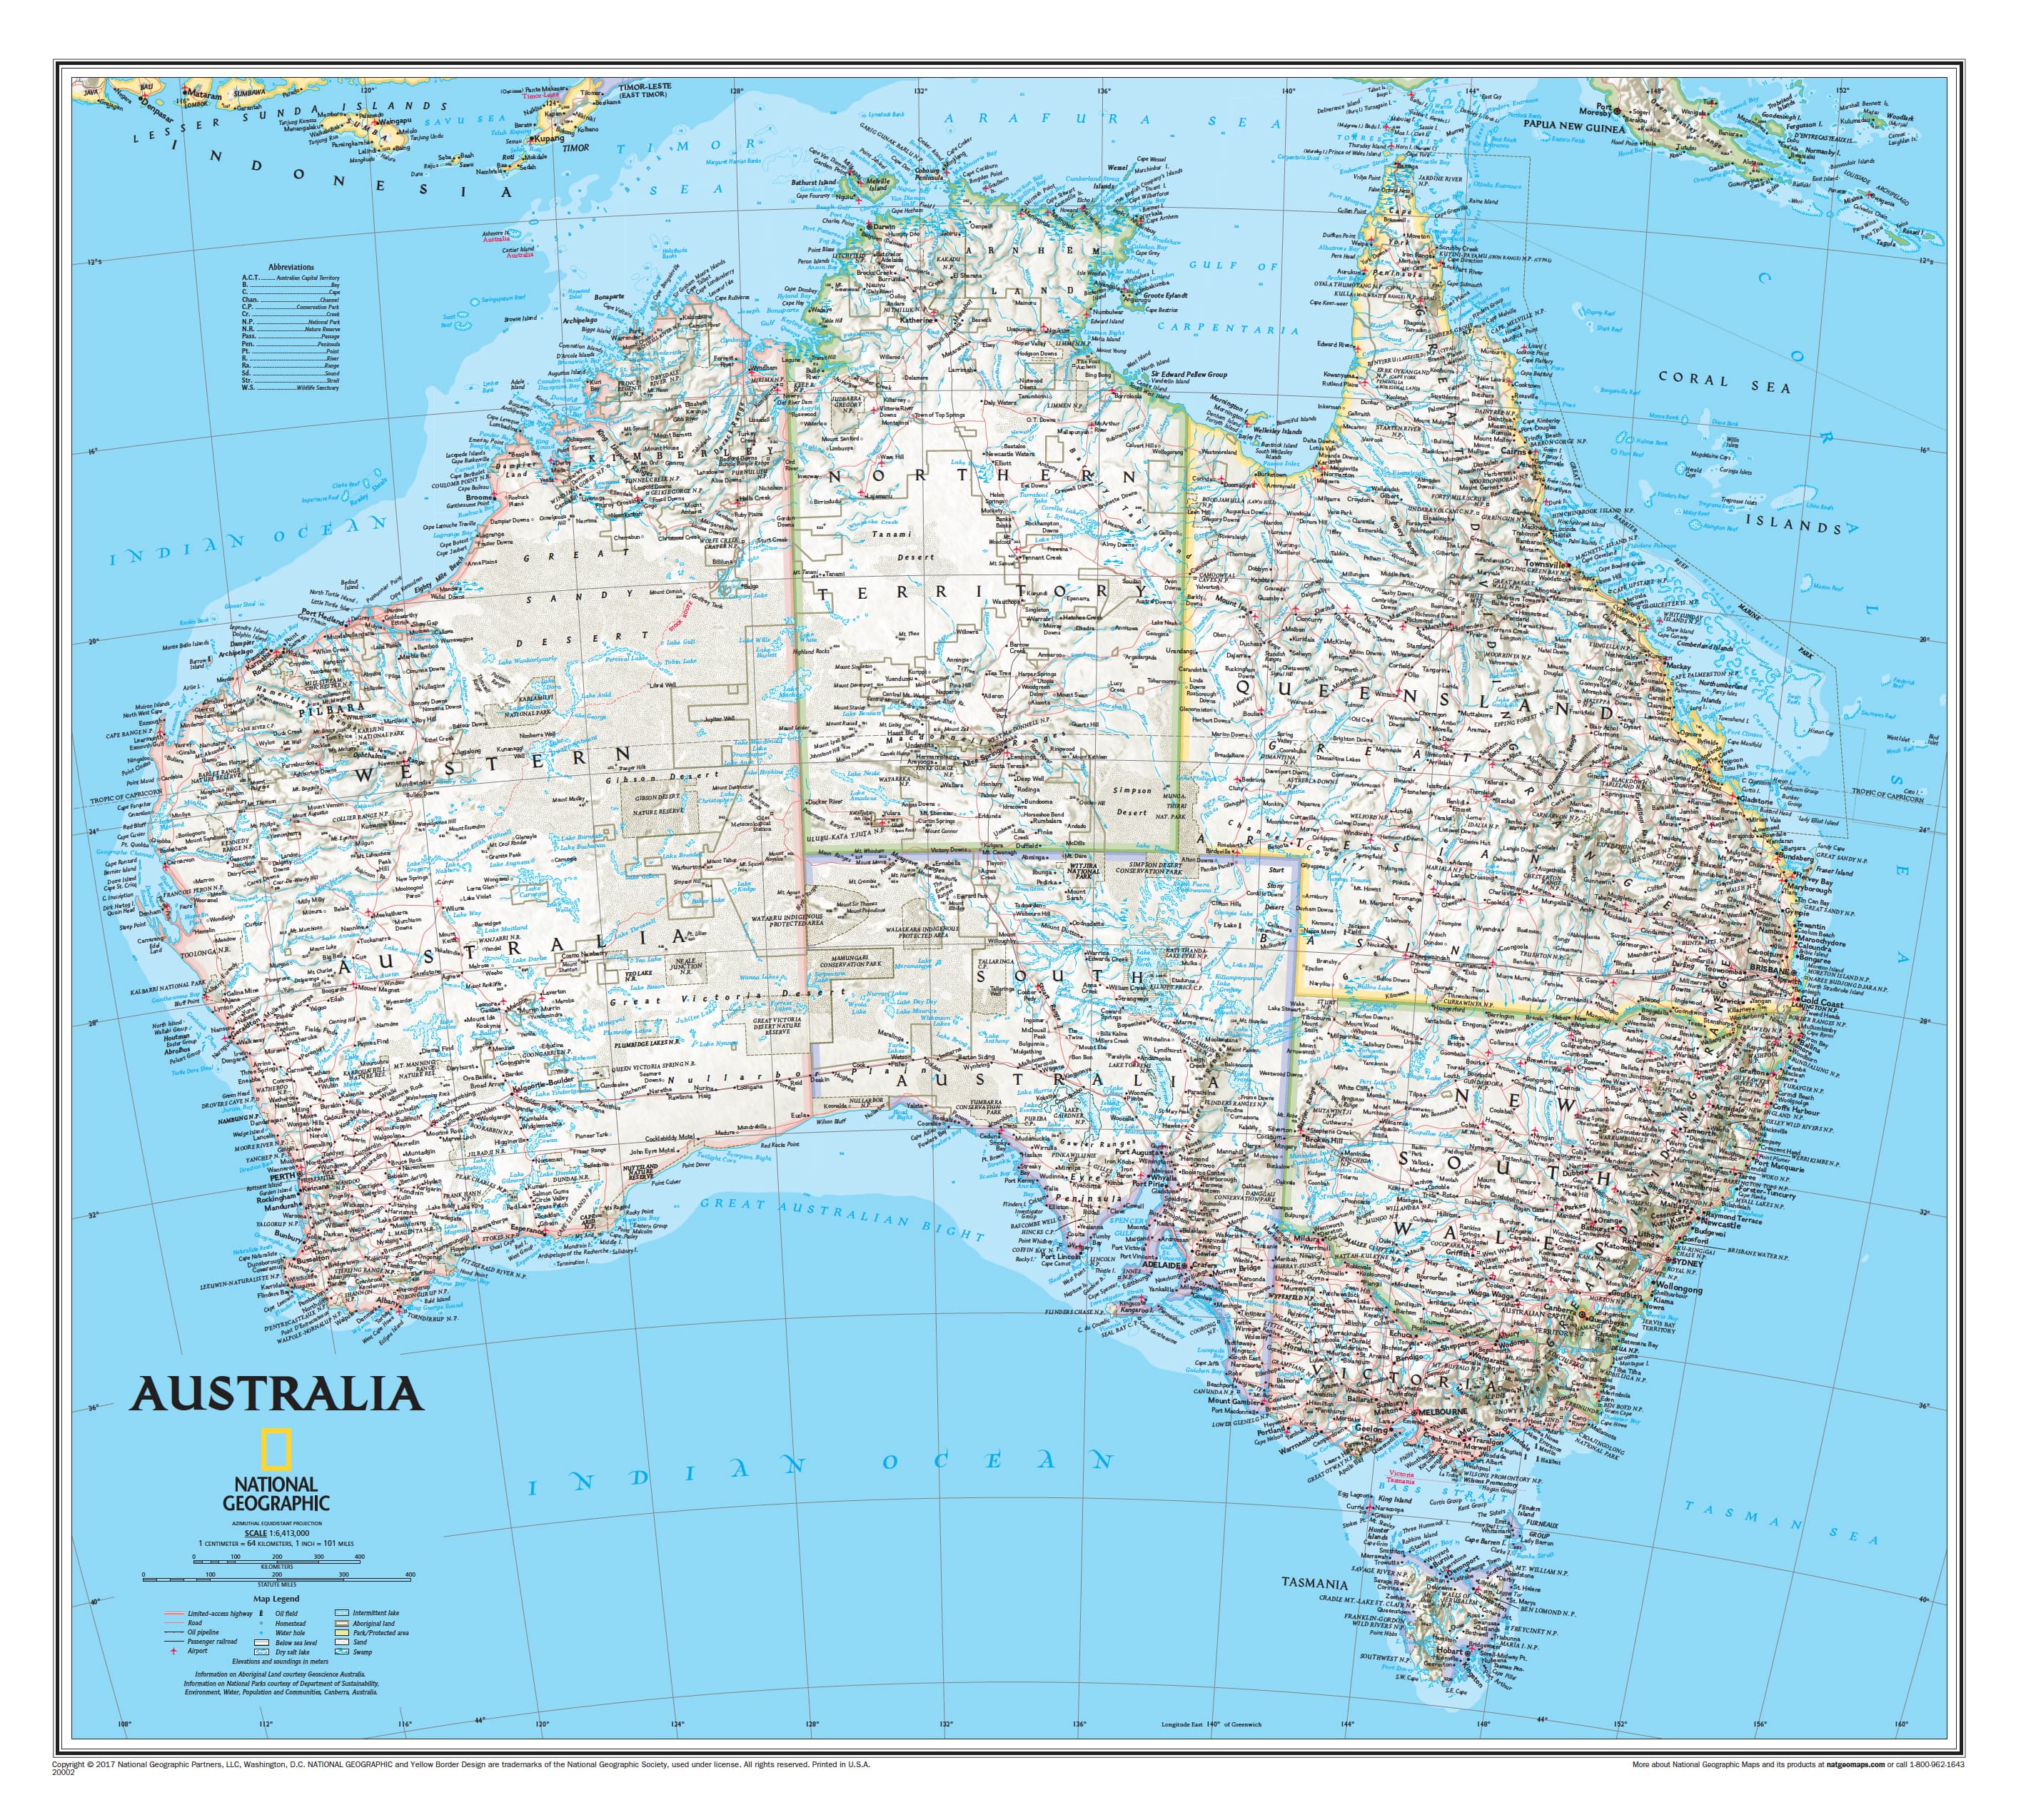 Australia National Geographic 770 X 689mm Wall Map 52cc7645 0dd1 4ca1 80a8 94875e99f97b ?v=1573614205